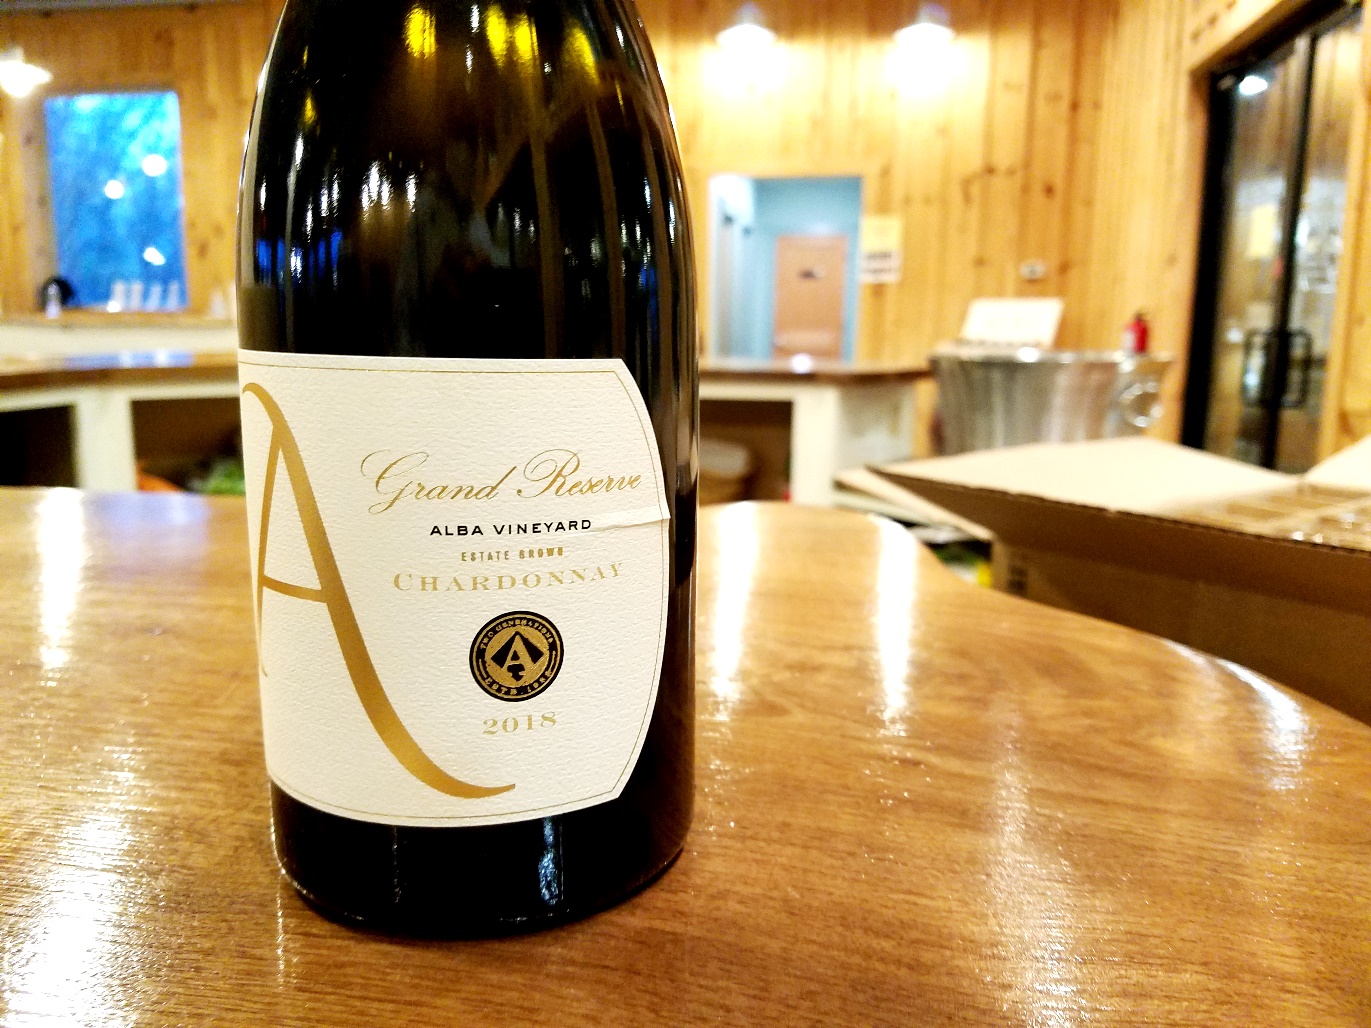 Alba Vineyard, Grand Reserve Chardonnay 2018, Warren Hills, New Jersey, Wine Casual